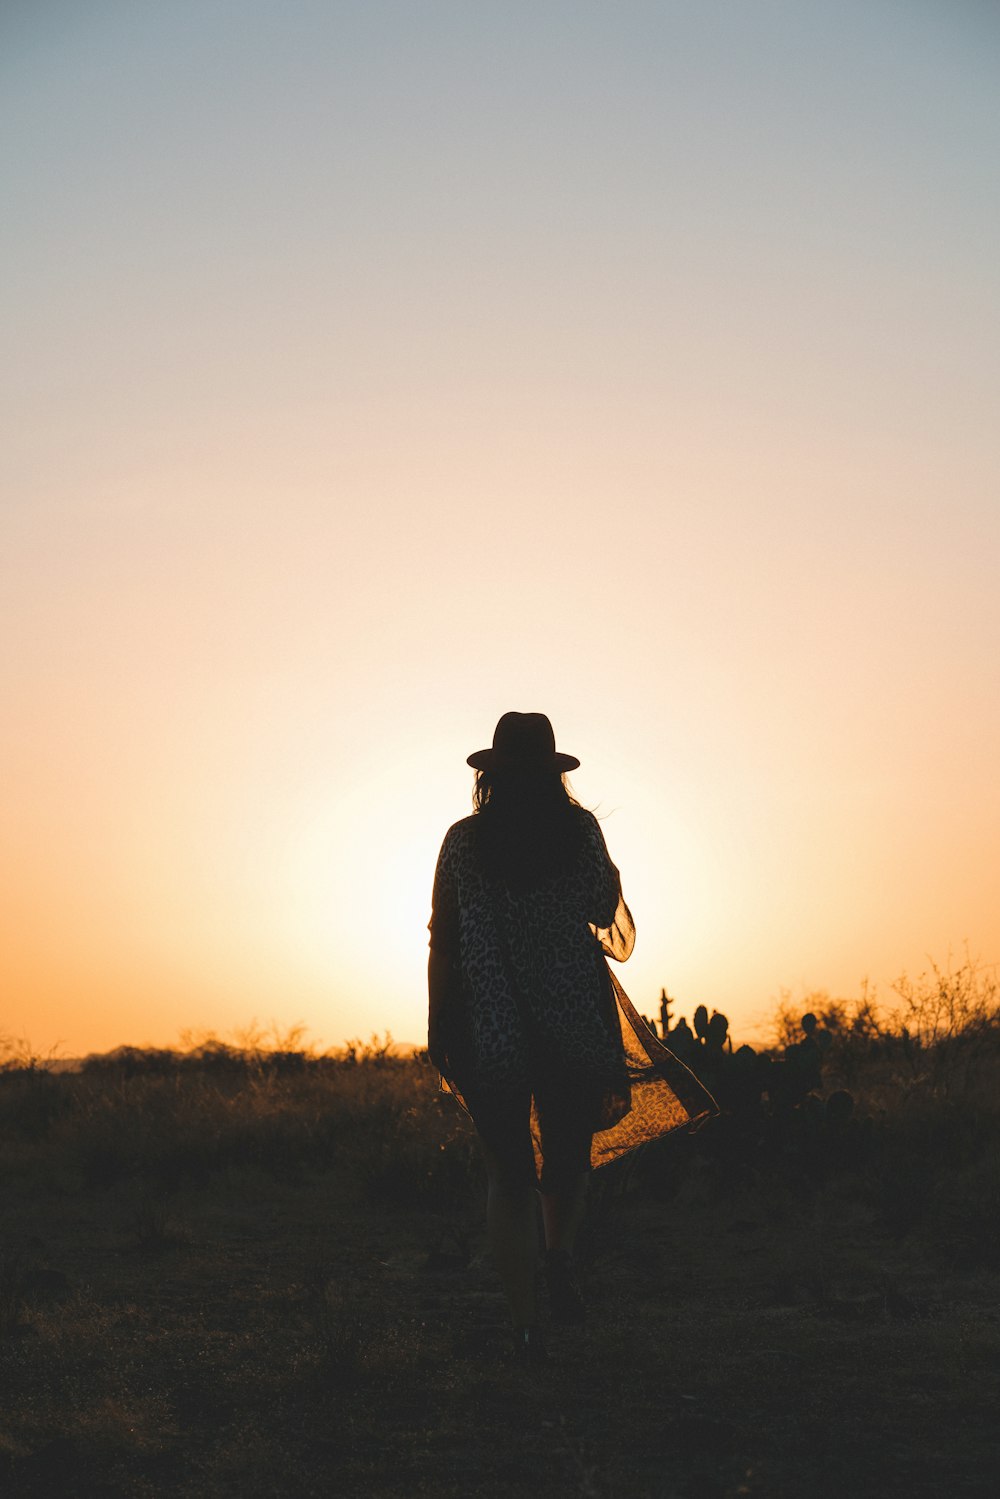 a woman walking through a field at sunset